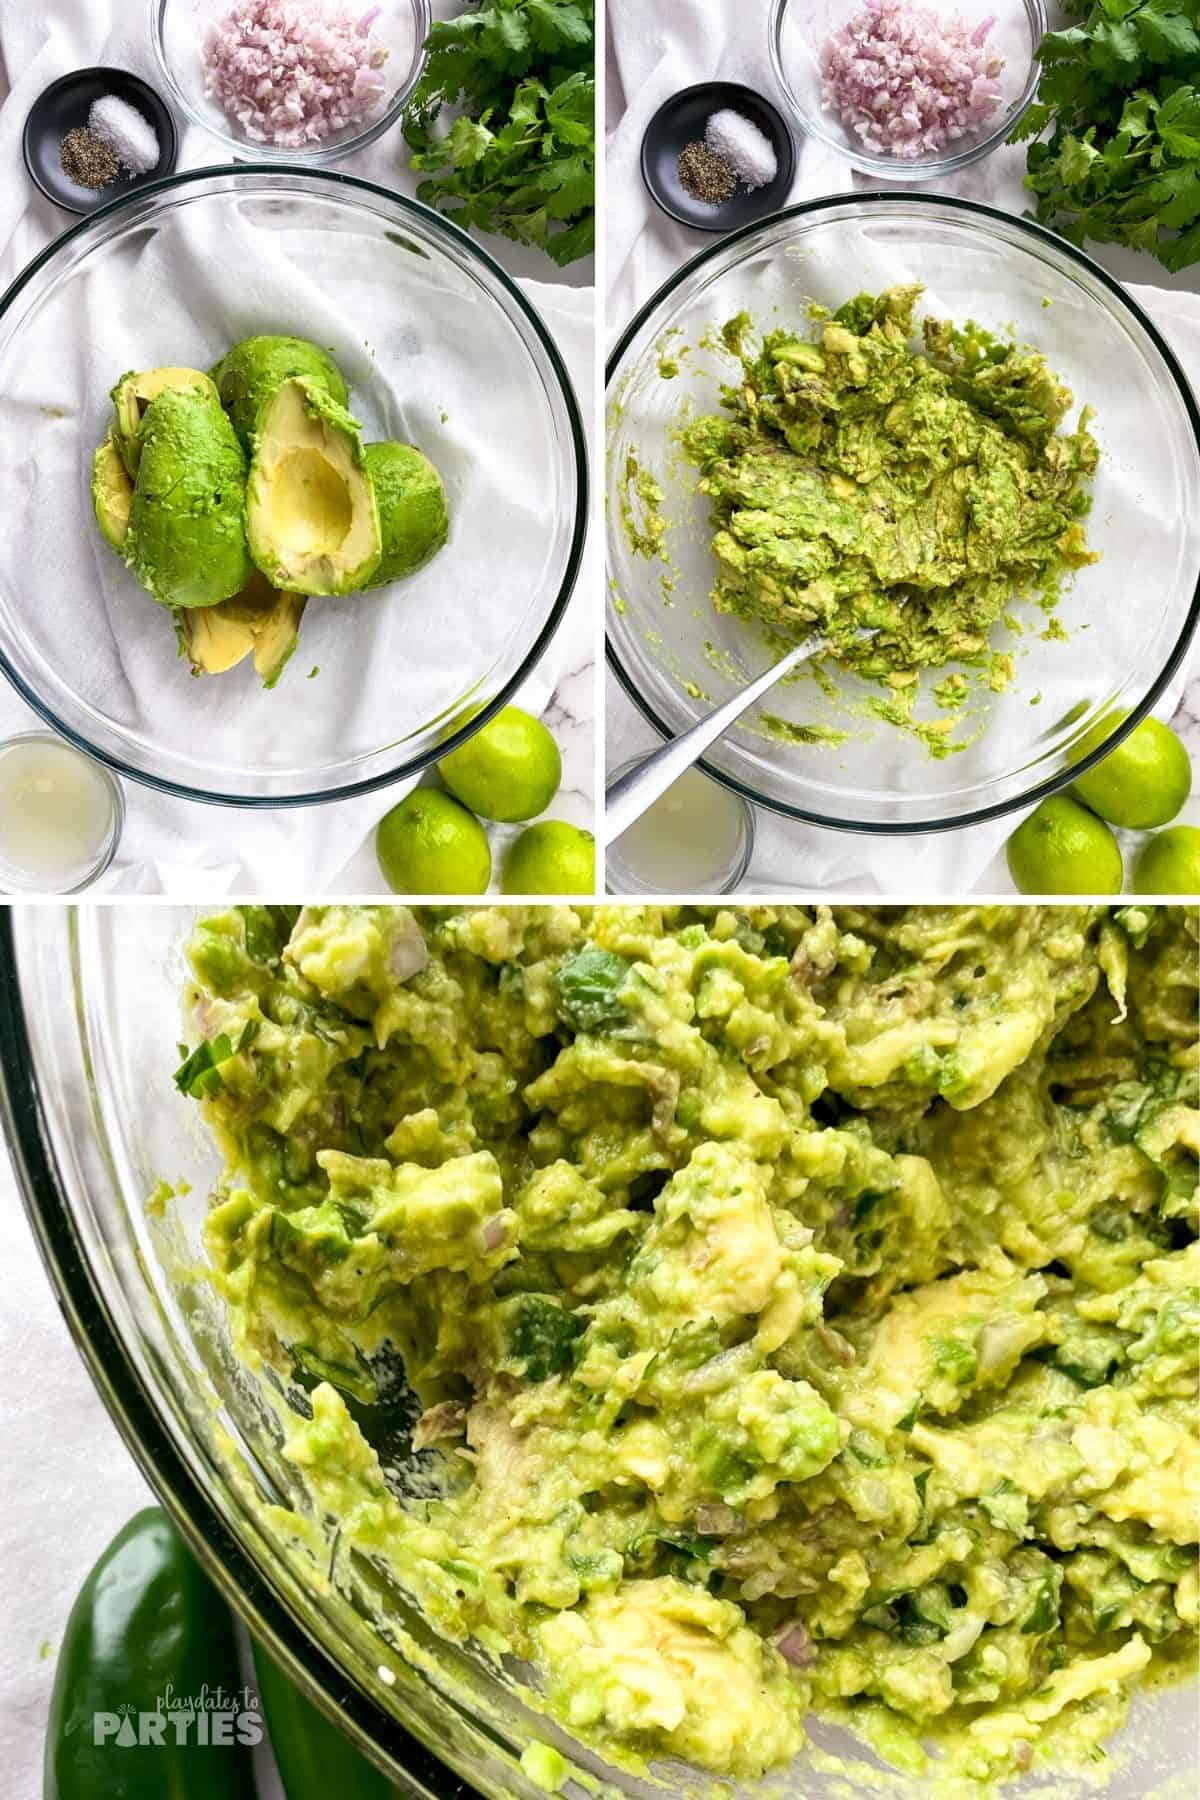 How to make easy guacamole.